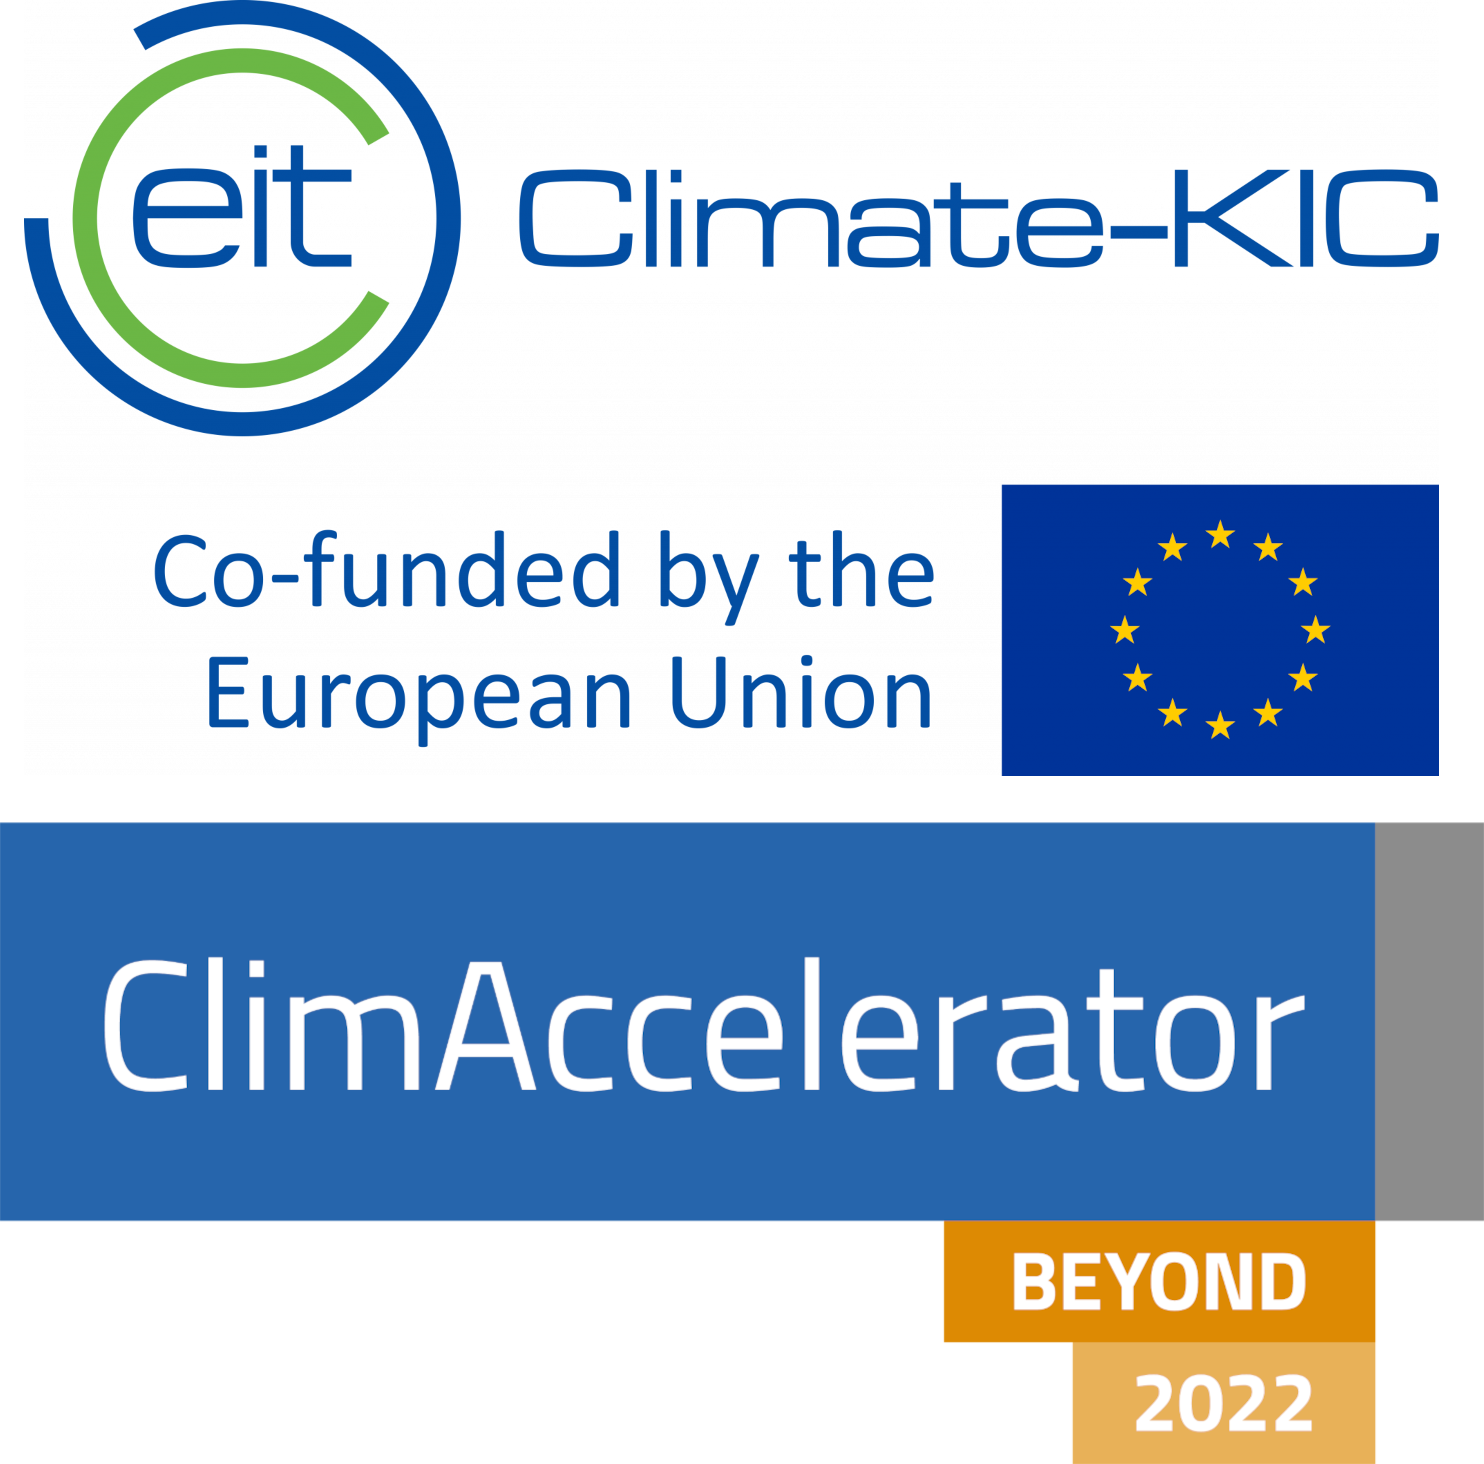 EIT CKIC ClimAccelerator Beyond 2022